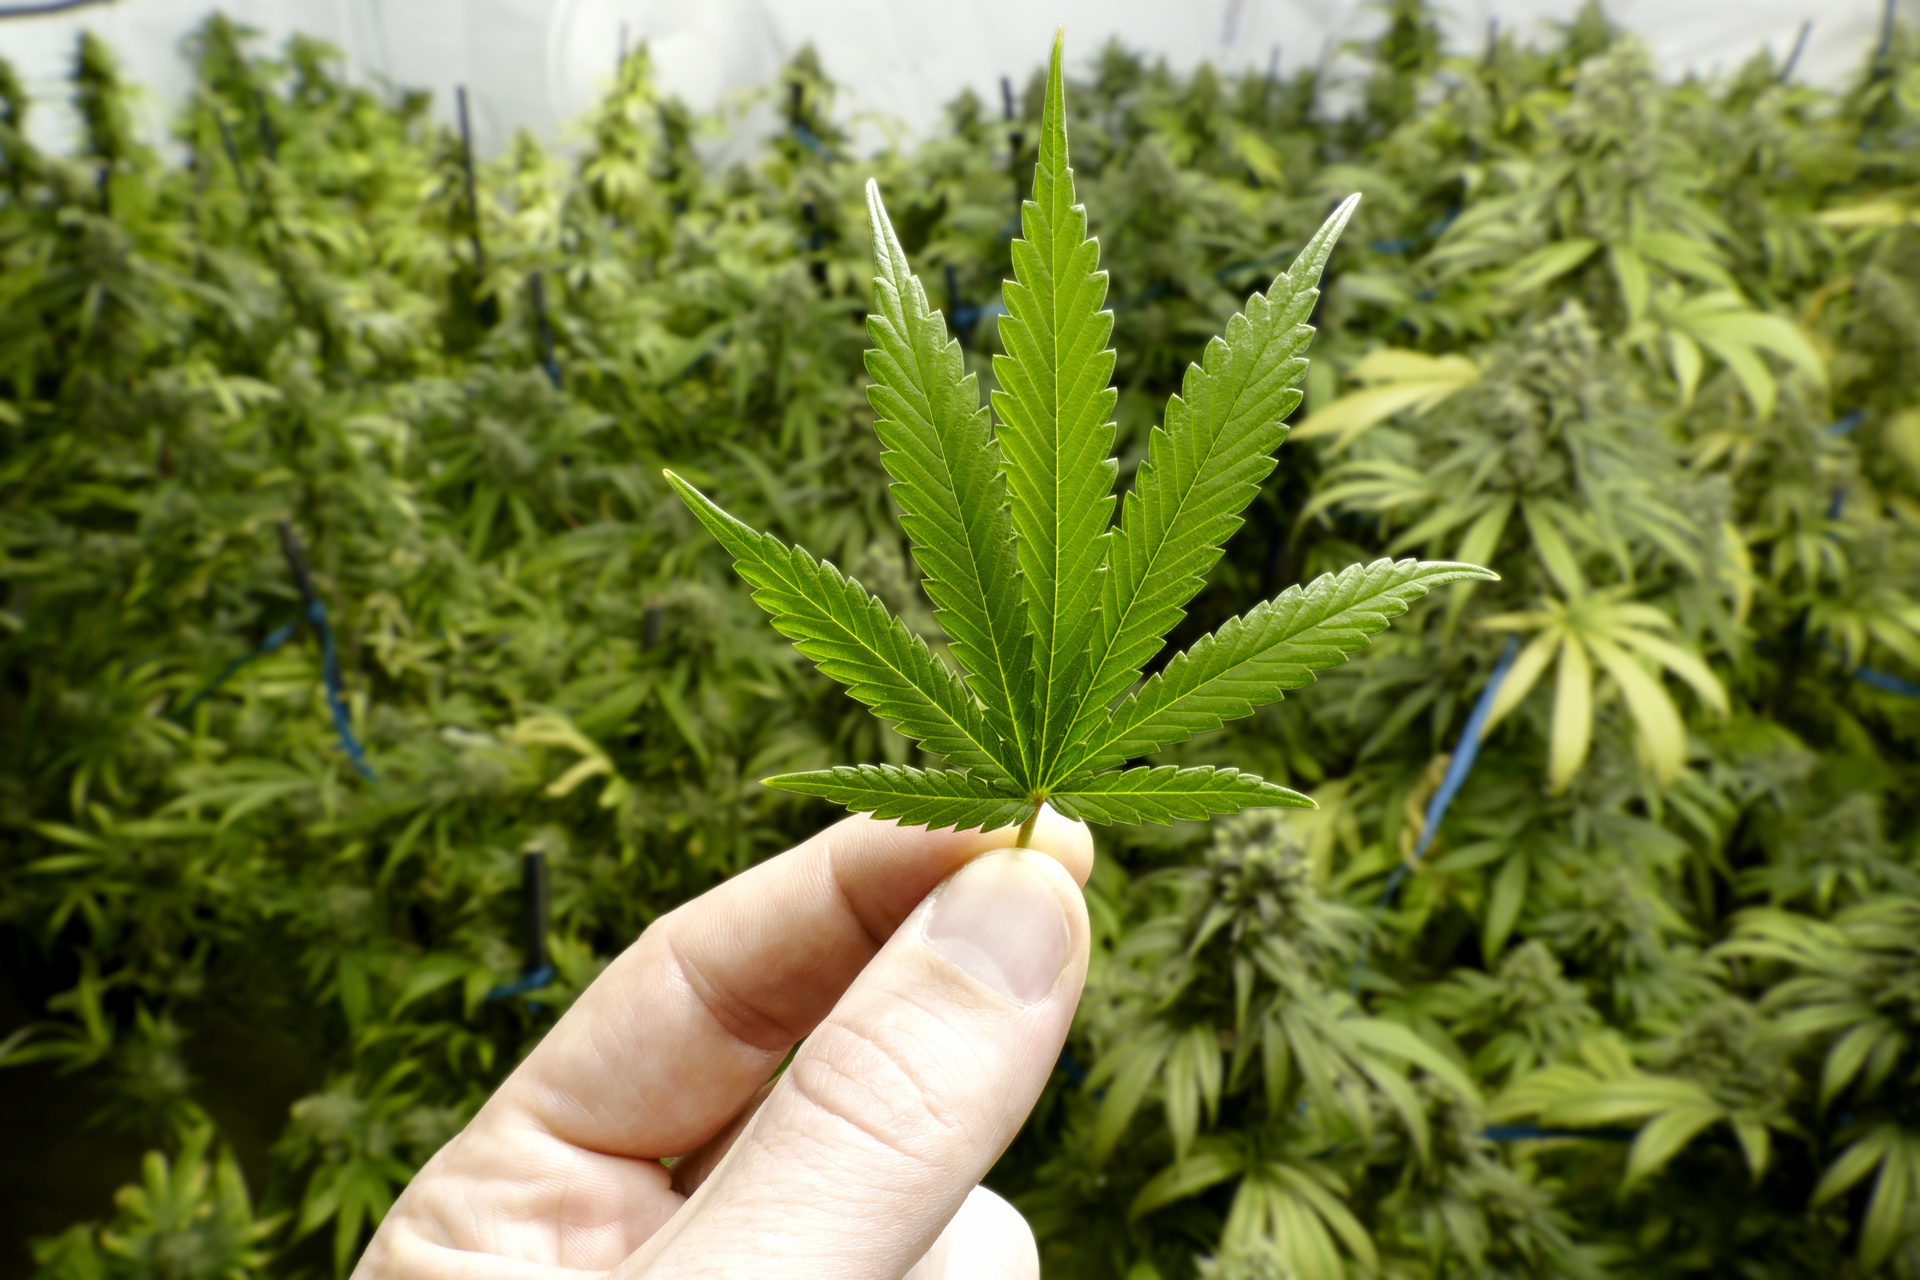 Cannabis company Medical Kiwi declined NZX listing - NZ Herald